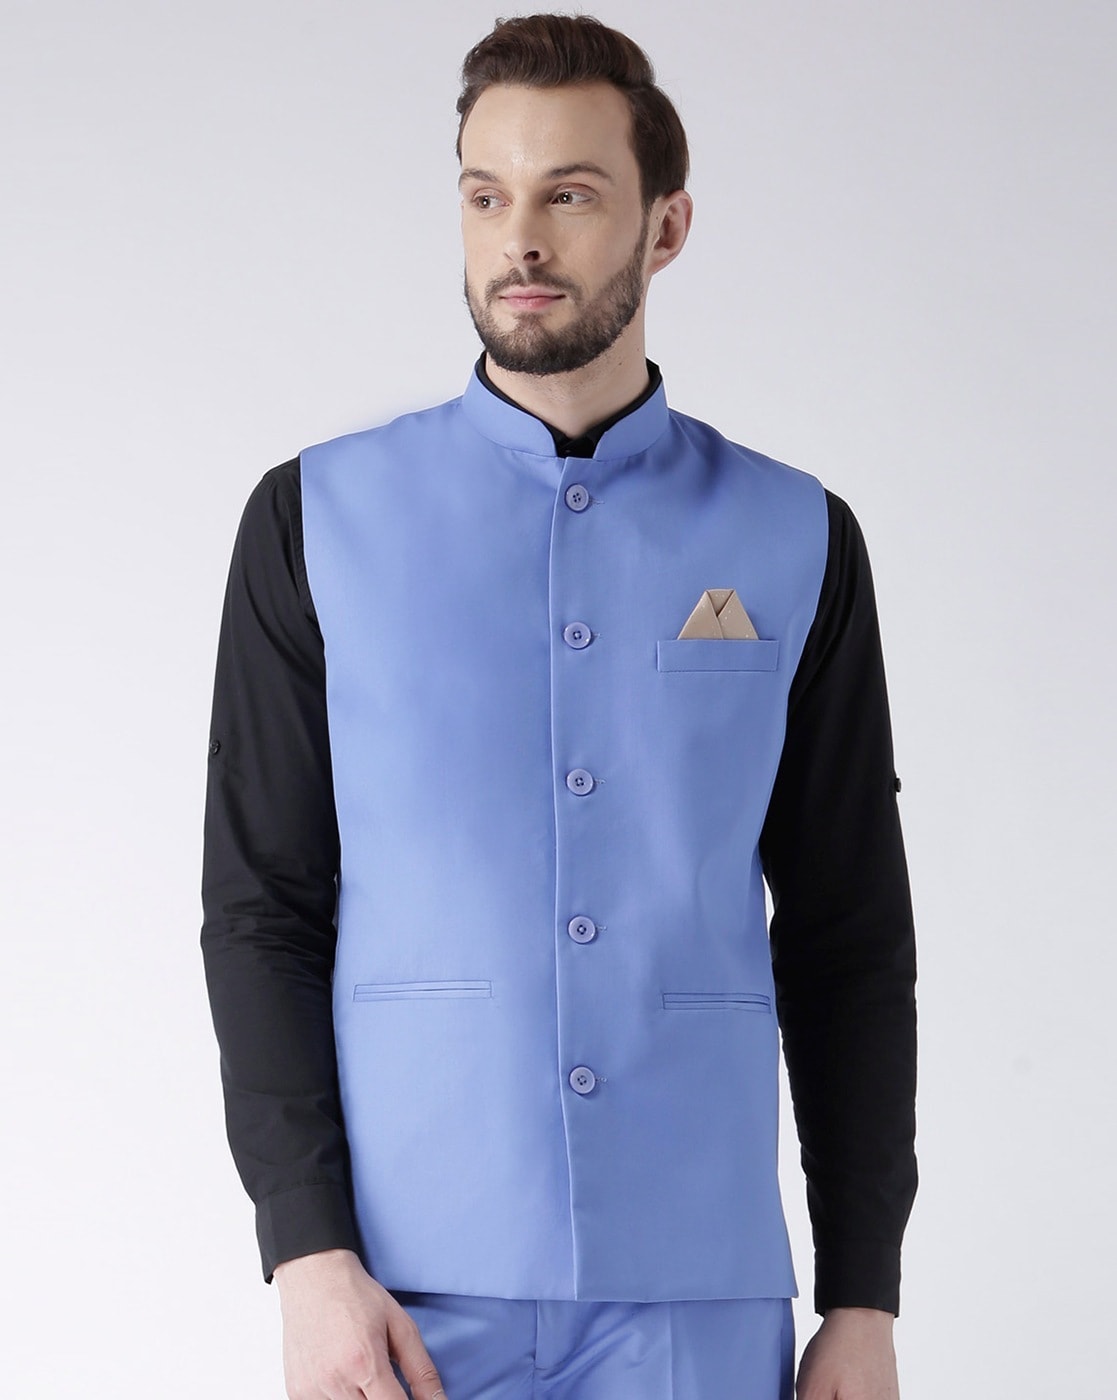 Men Multicoloured Printed Nehru Jacket With Pocket Square at Rs 2211.00 |  Modi Jacket, Mens Koti, नेहरू जैकेट - SVB Ventures, Bengaluru | ID:  25933706555